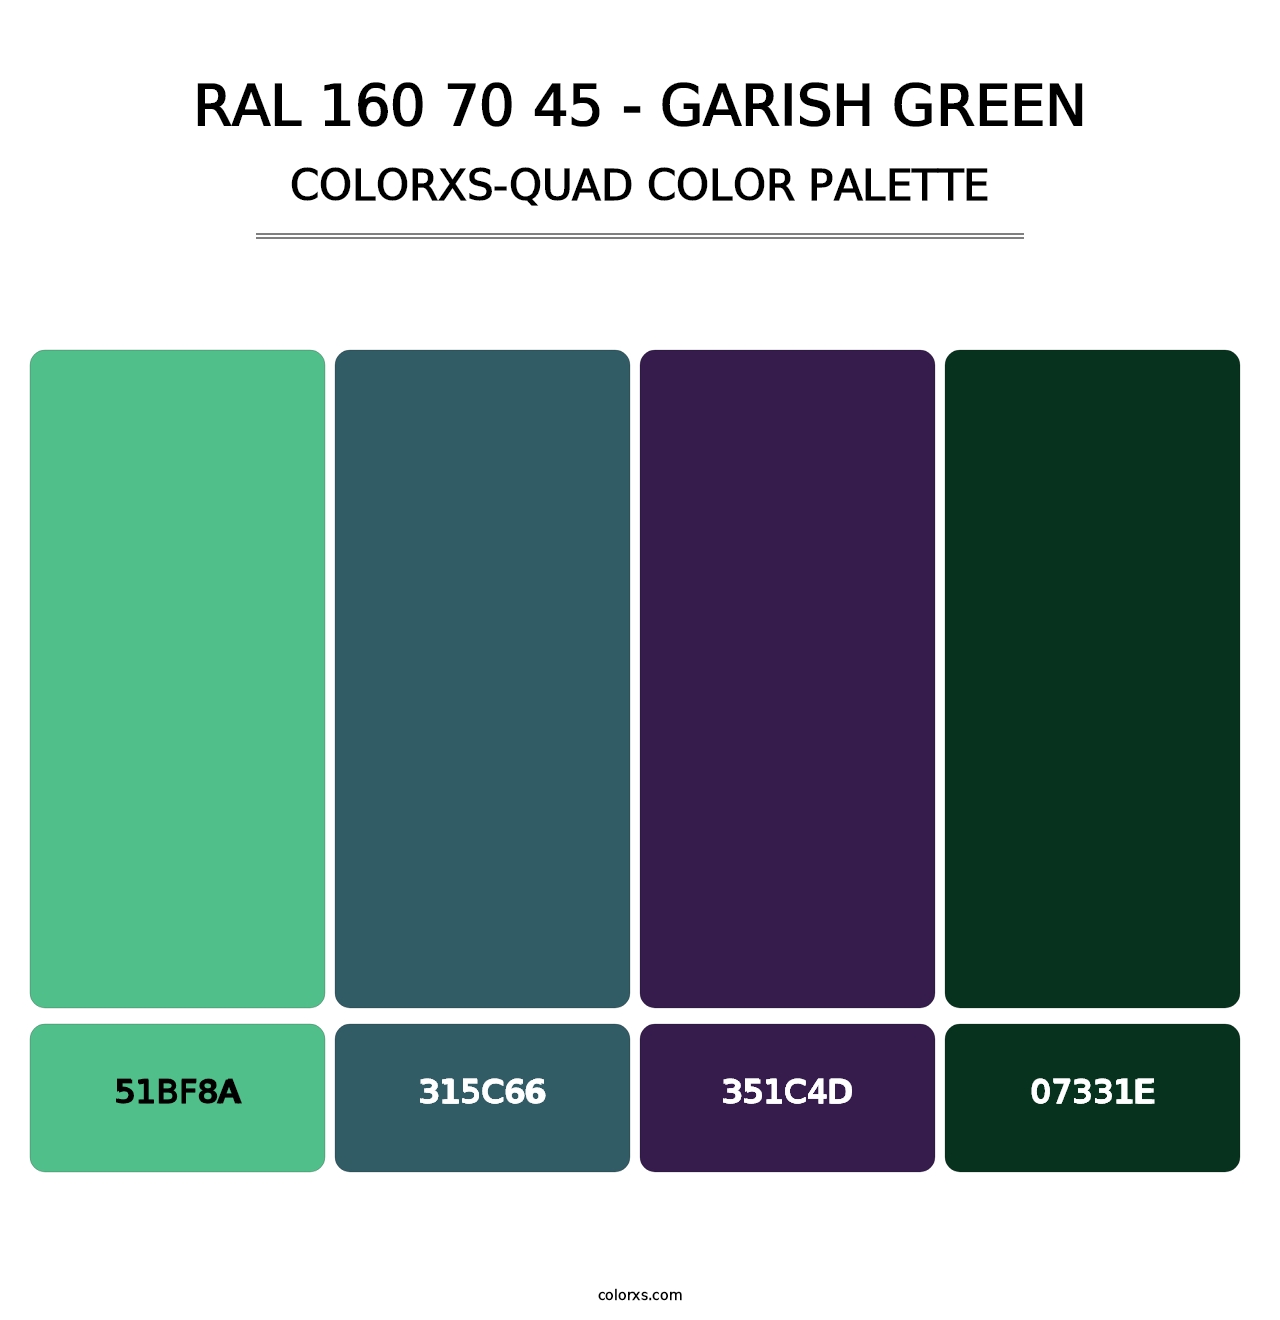 RAL 160 70 45 - Garish Green - Colorxs Quad Palette